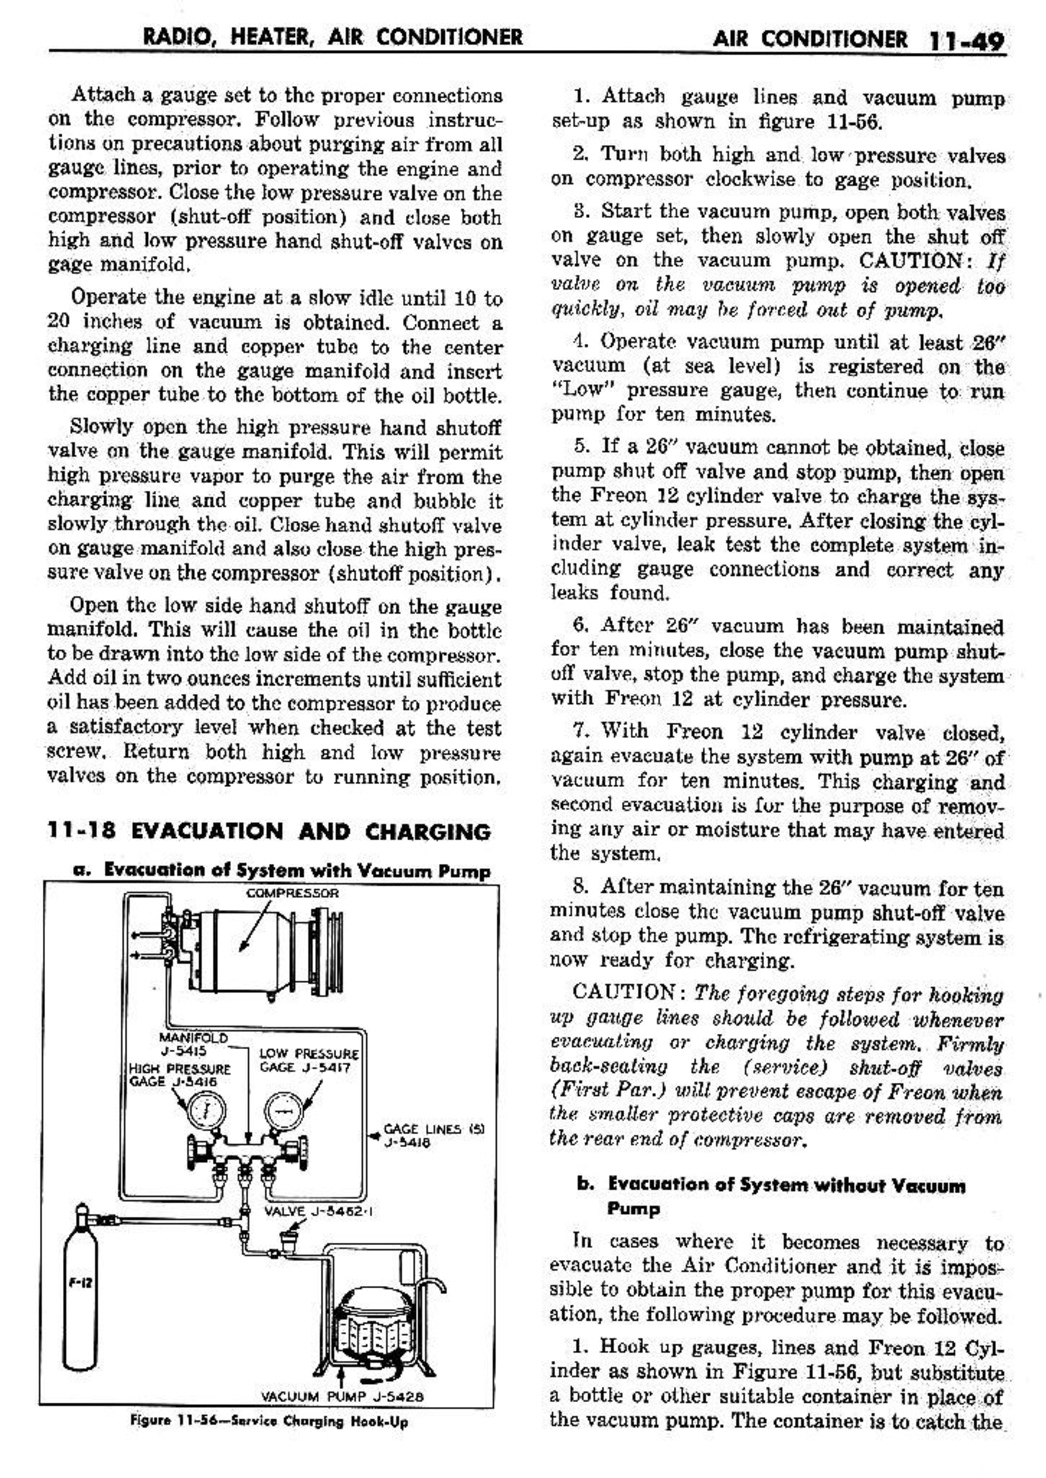 n_12 1959 Buick Shop Manual - Radio-Heater-AC-049-049.jpg